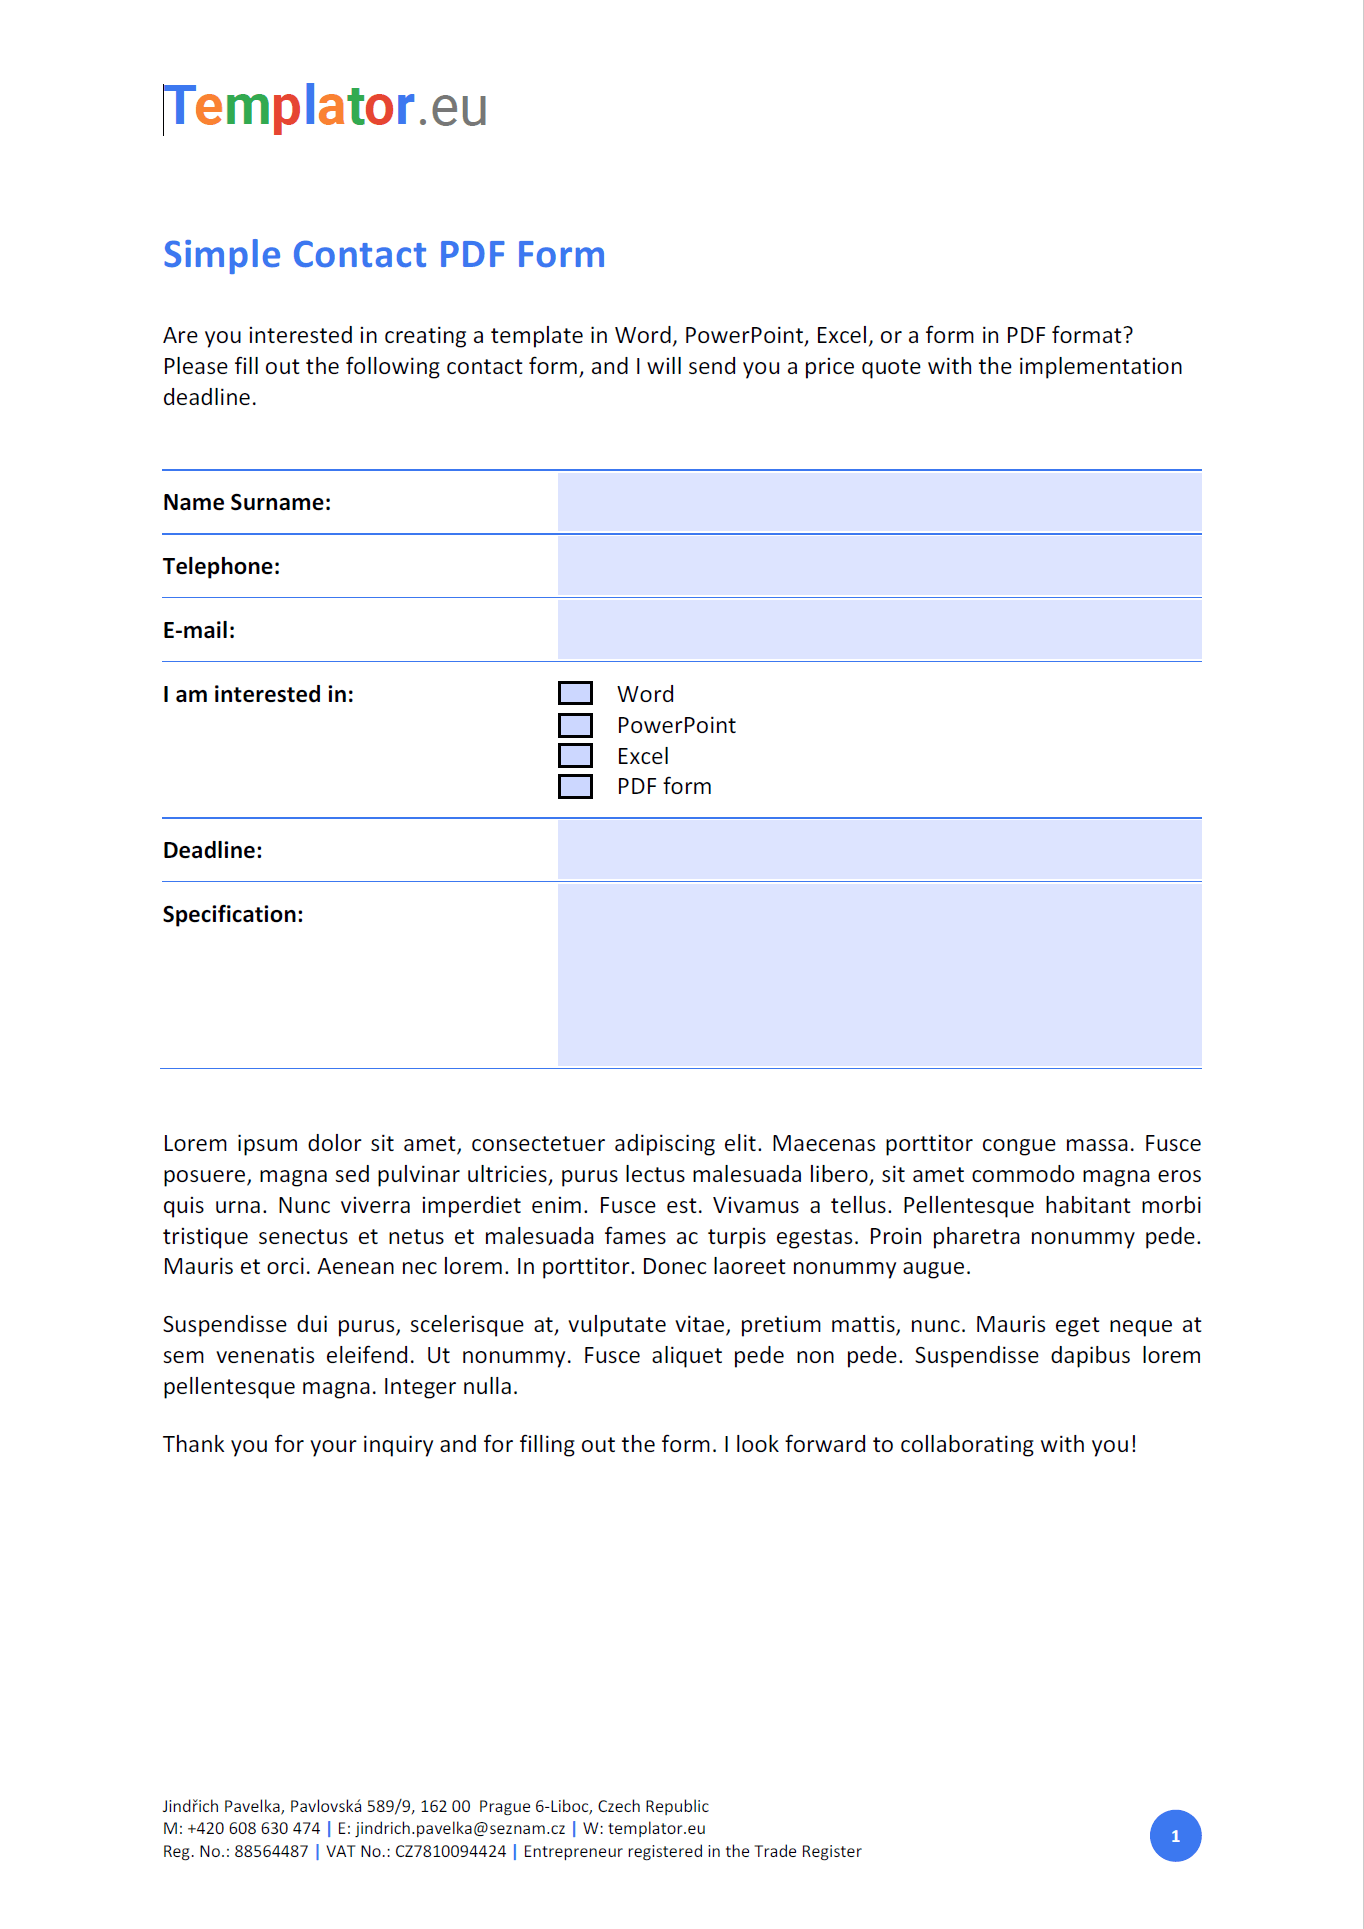 Sample PDF form